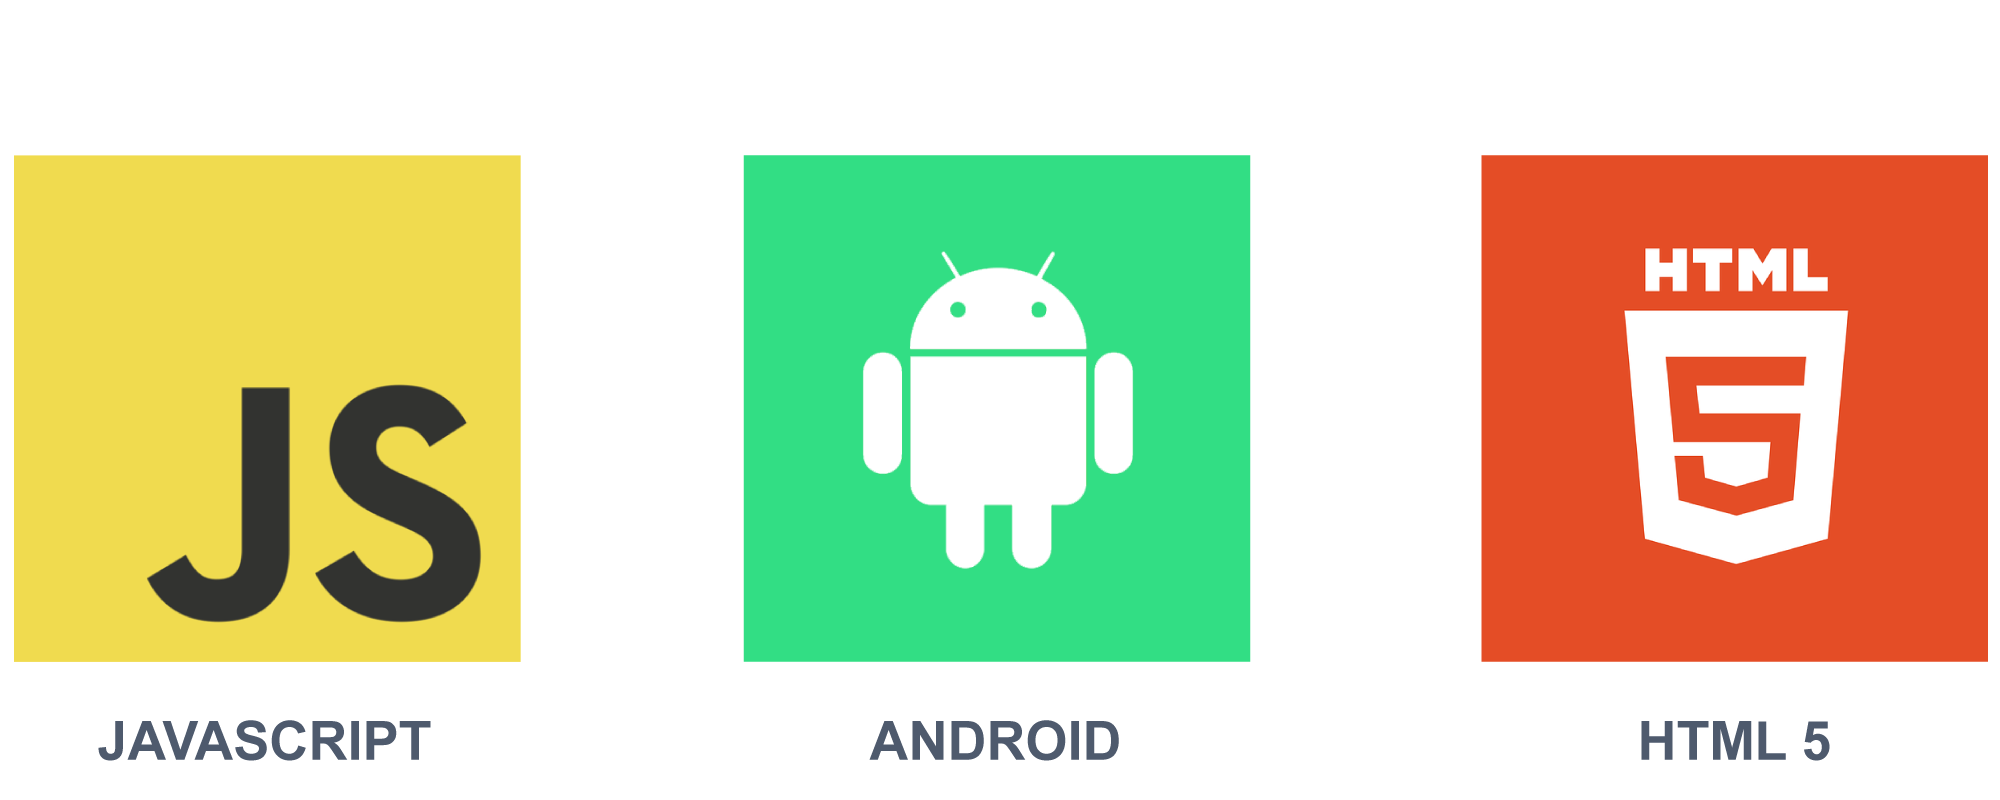 Will You Press The Button? APK (Android App) - Скачать Бесплатно